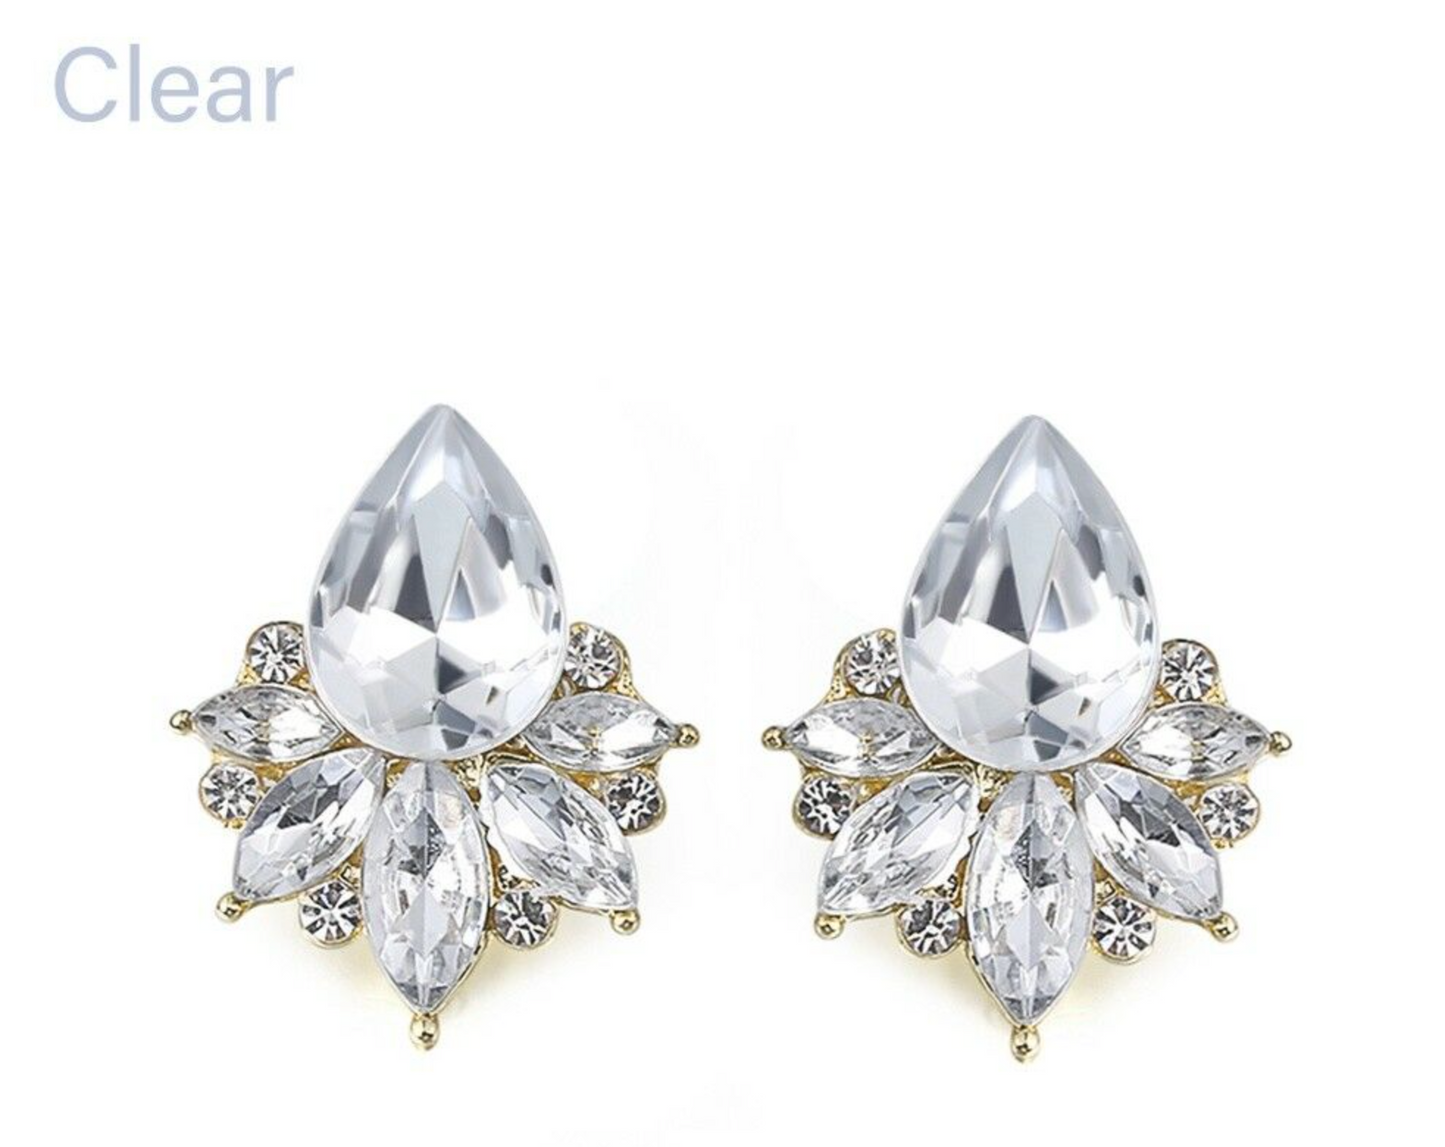 Opal Light Blue or Clear Crystal Stud Earrings